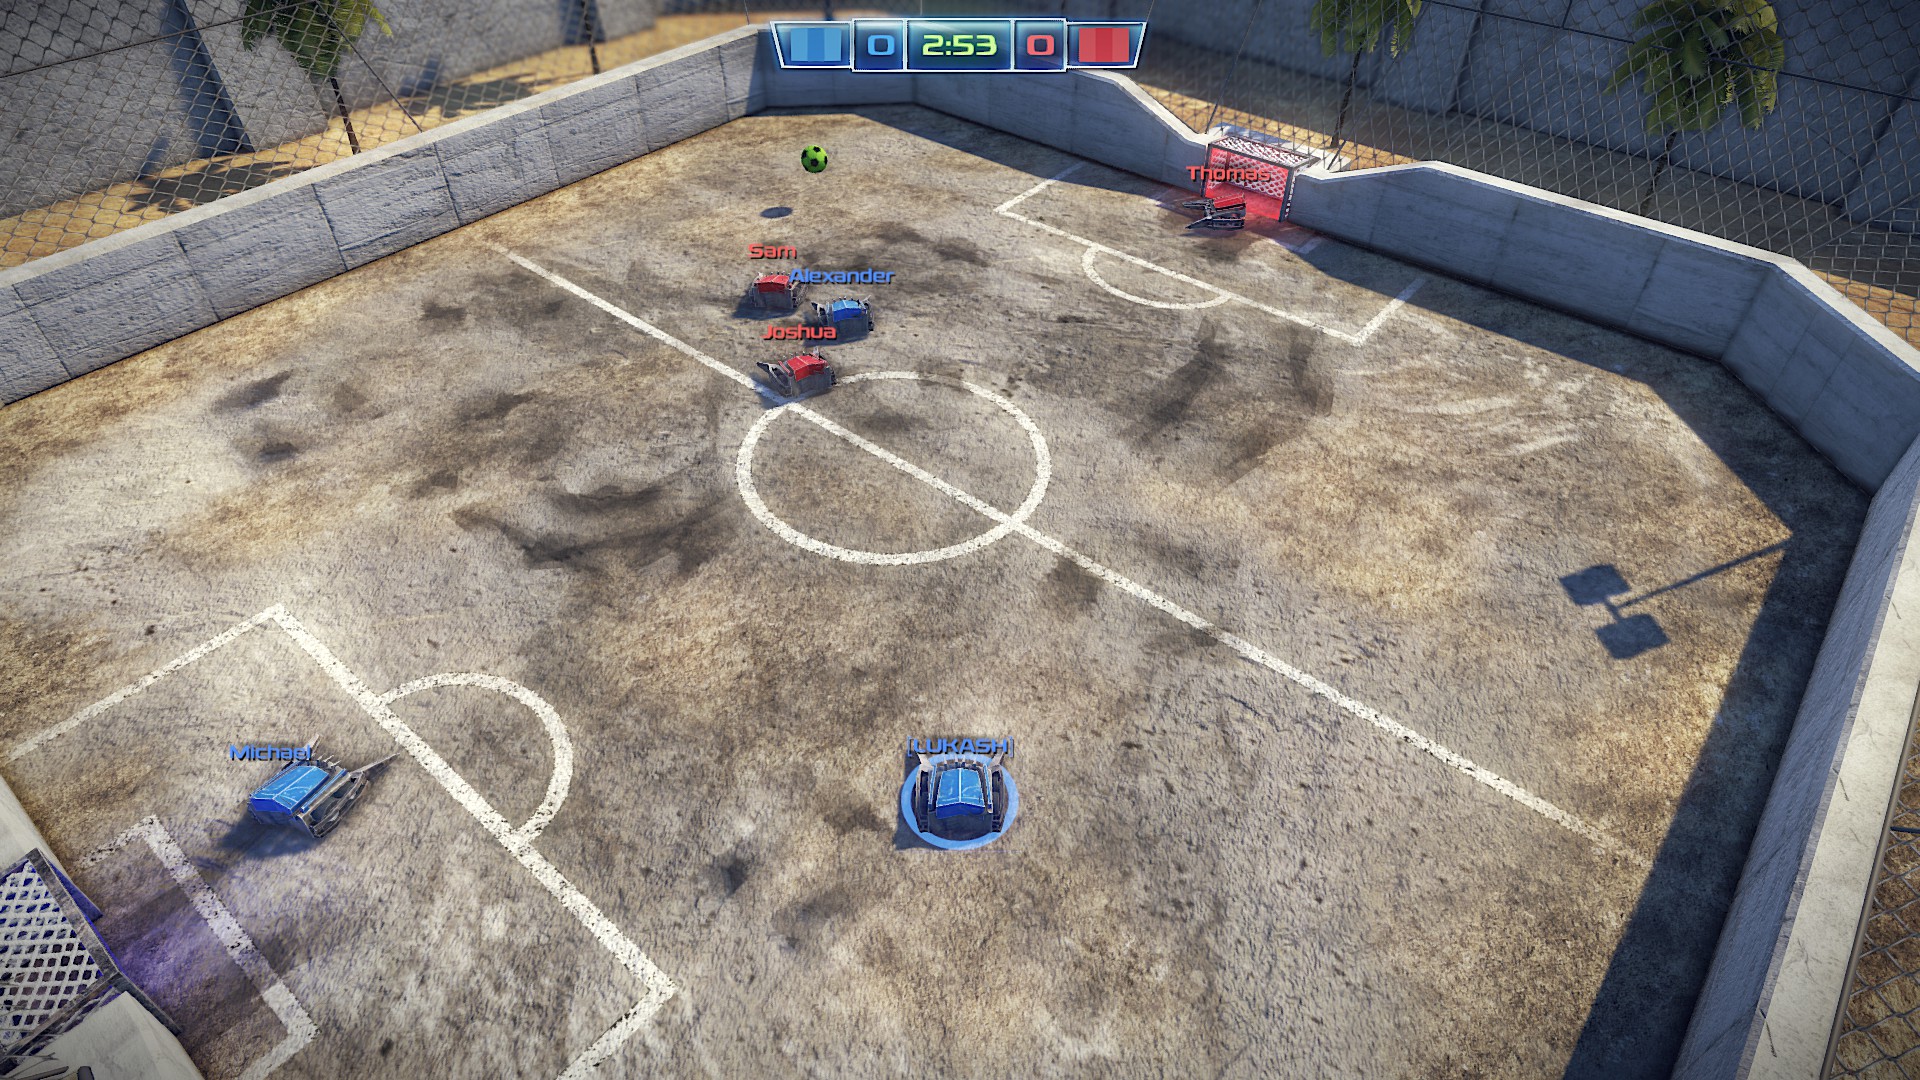 Robot Soccer Challenge Free Download